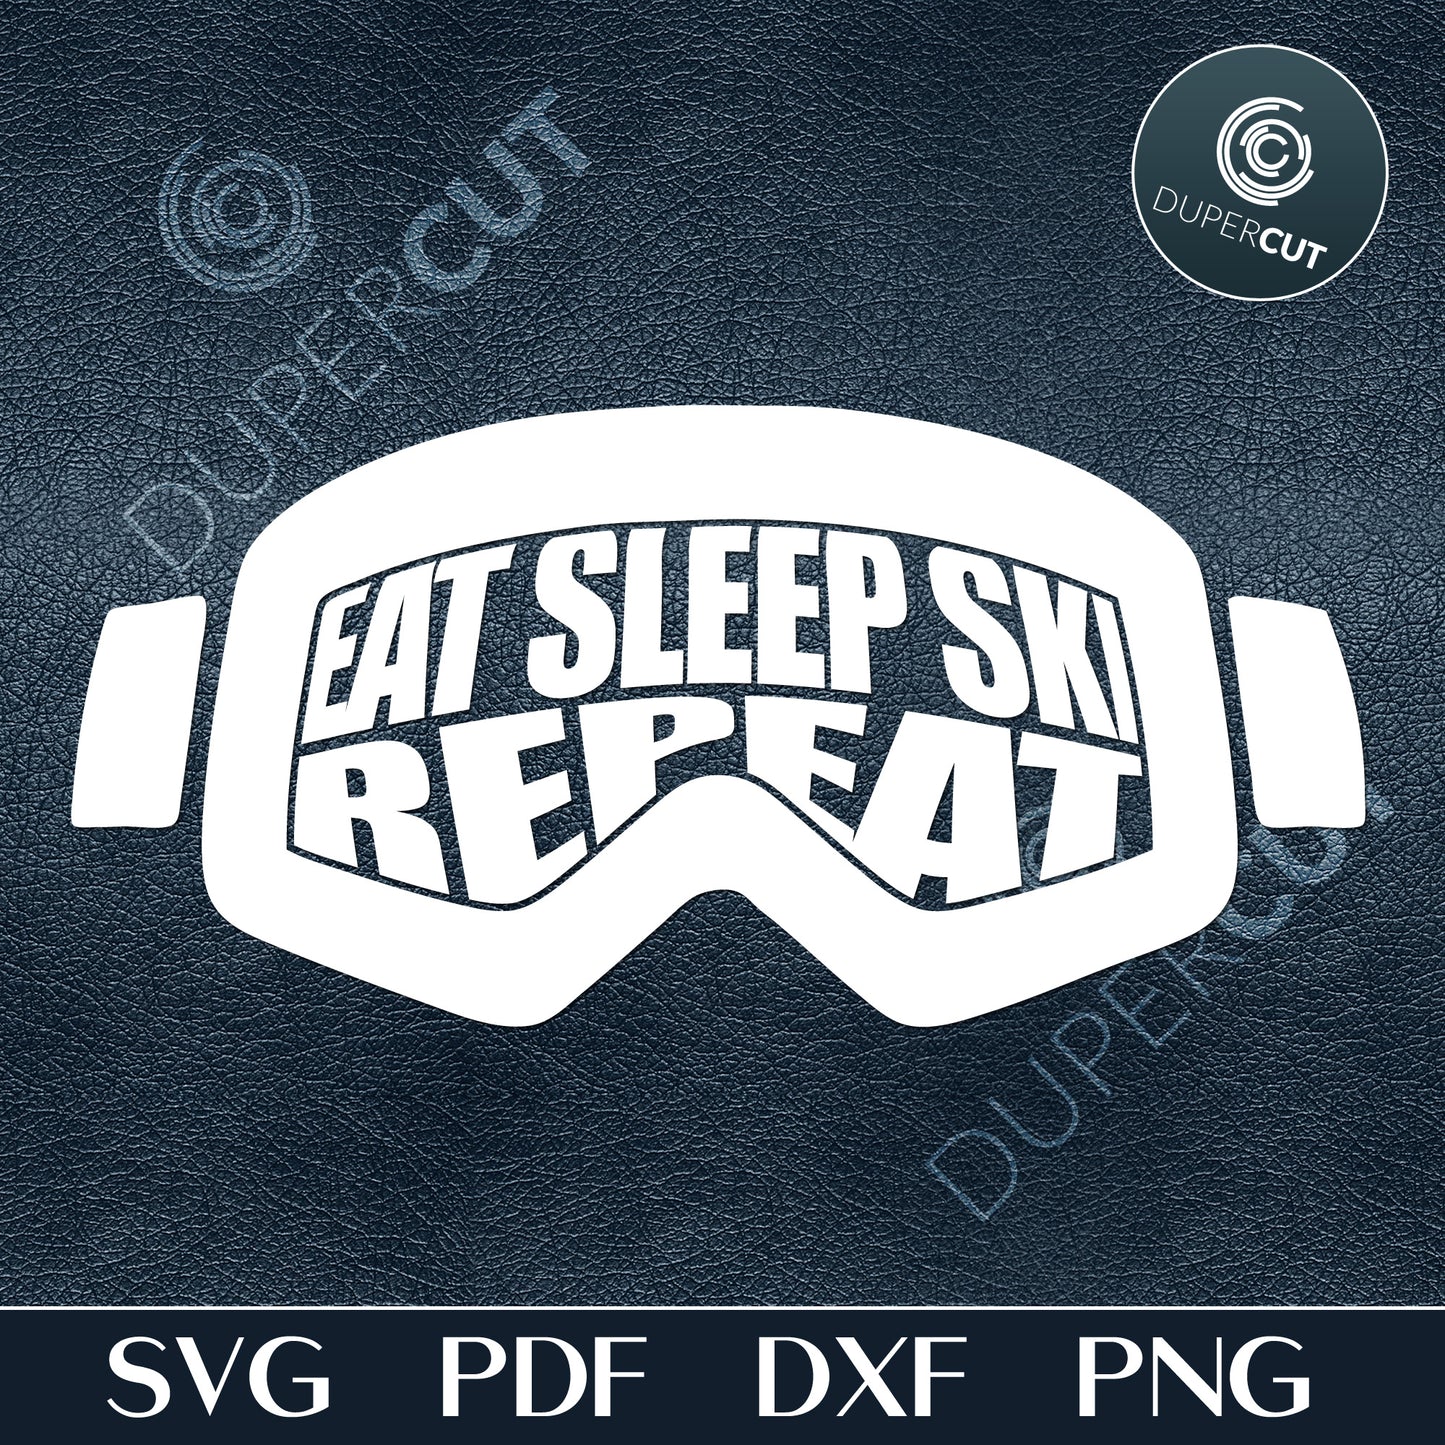 Paper cutting template - Ski Goggles - Eat Sleep Ski Repeat - Print on Demand files